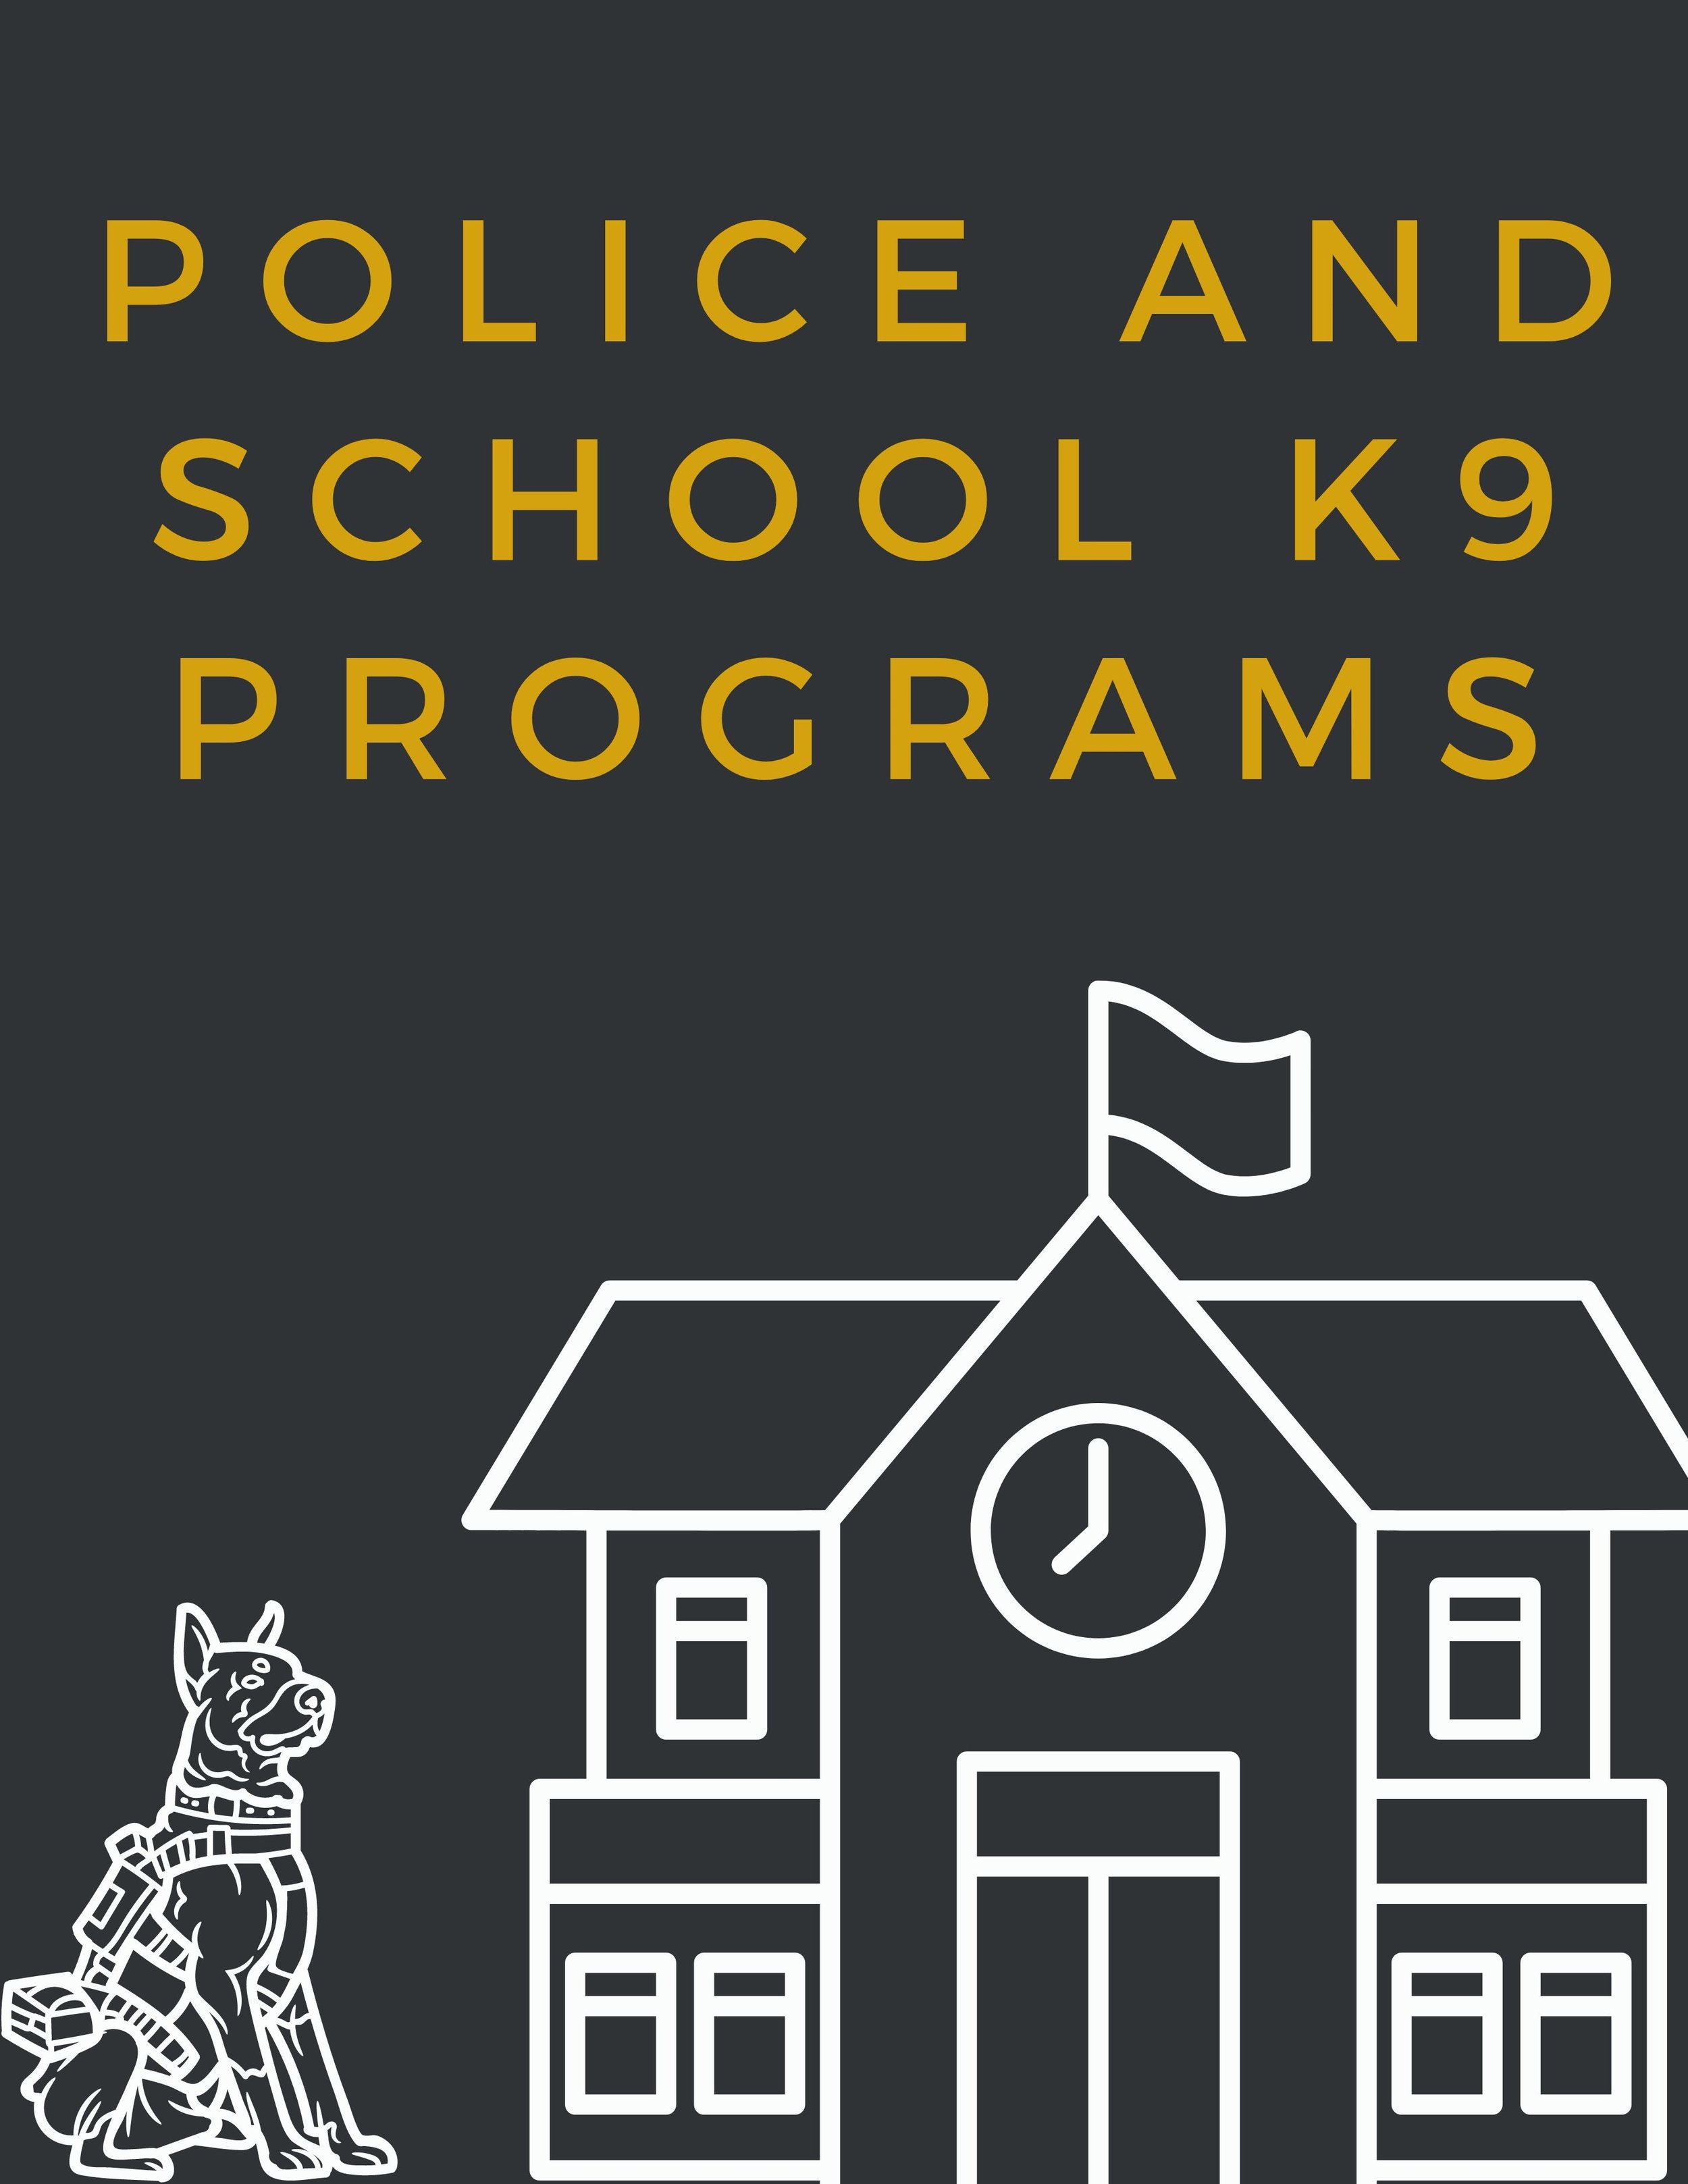 Police and School K9 Programs